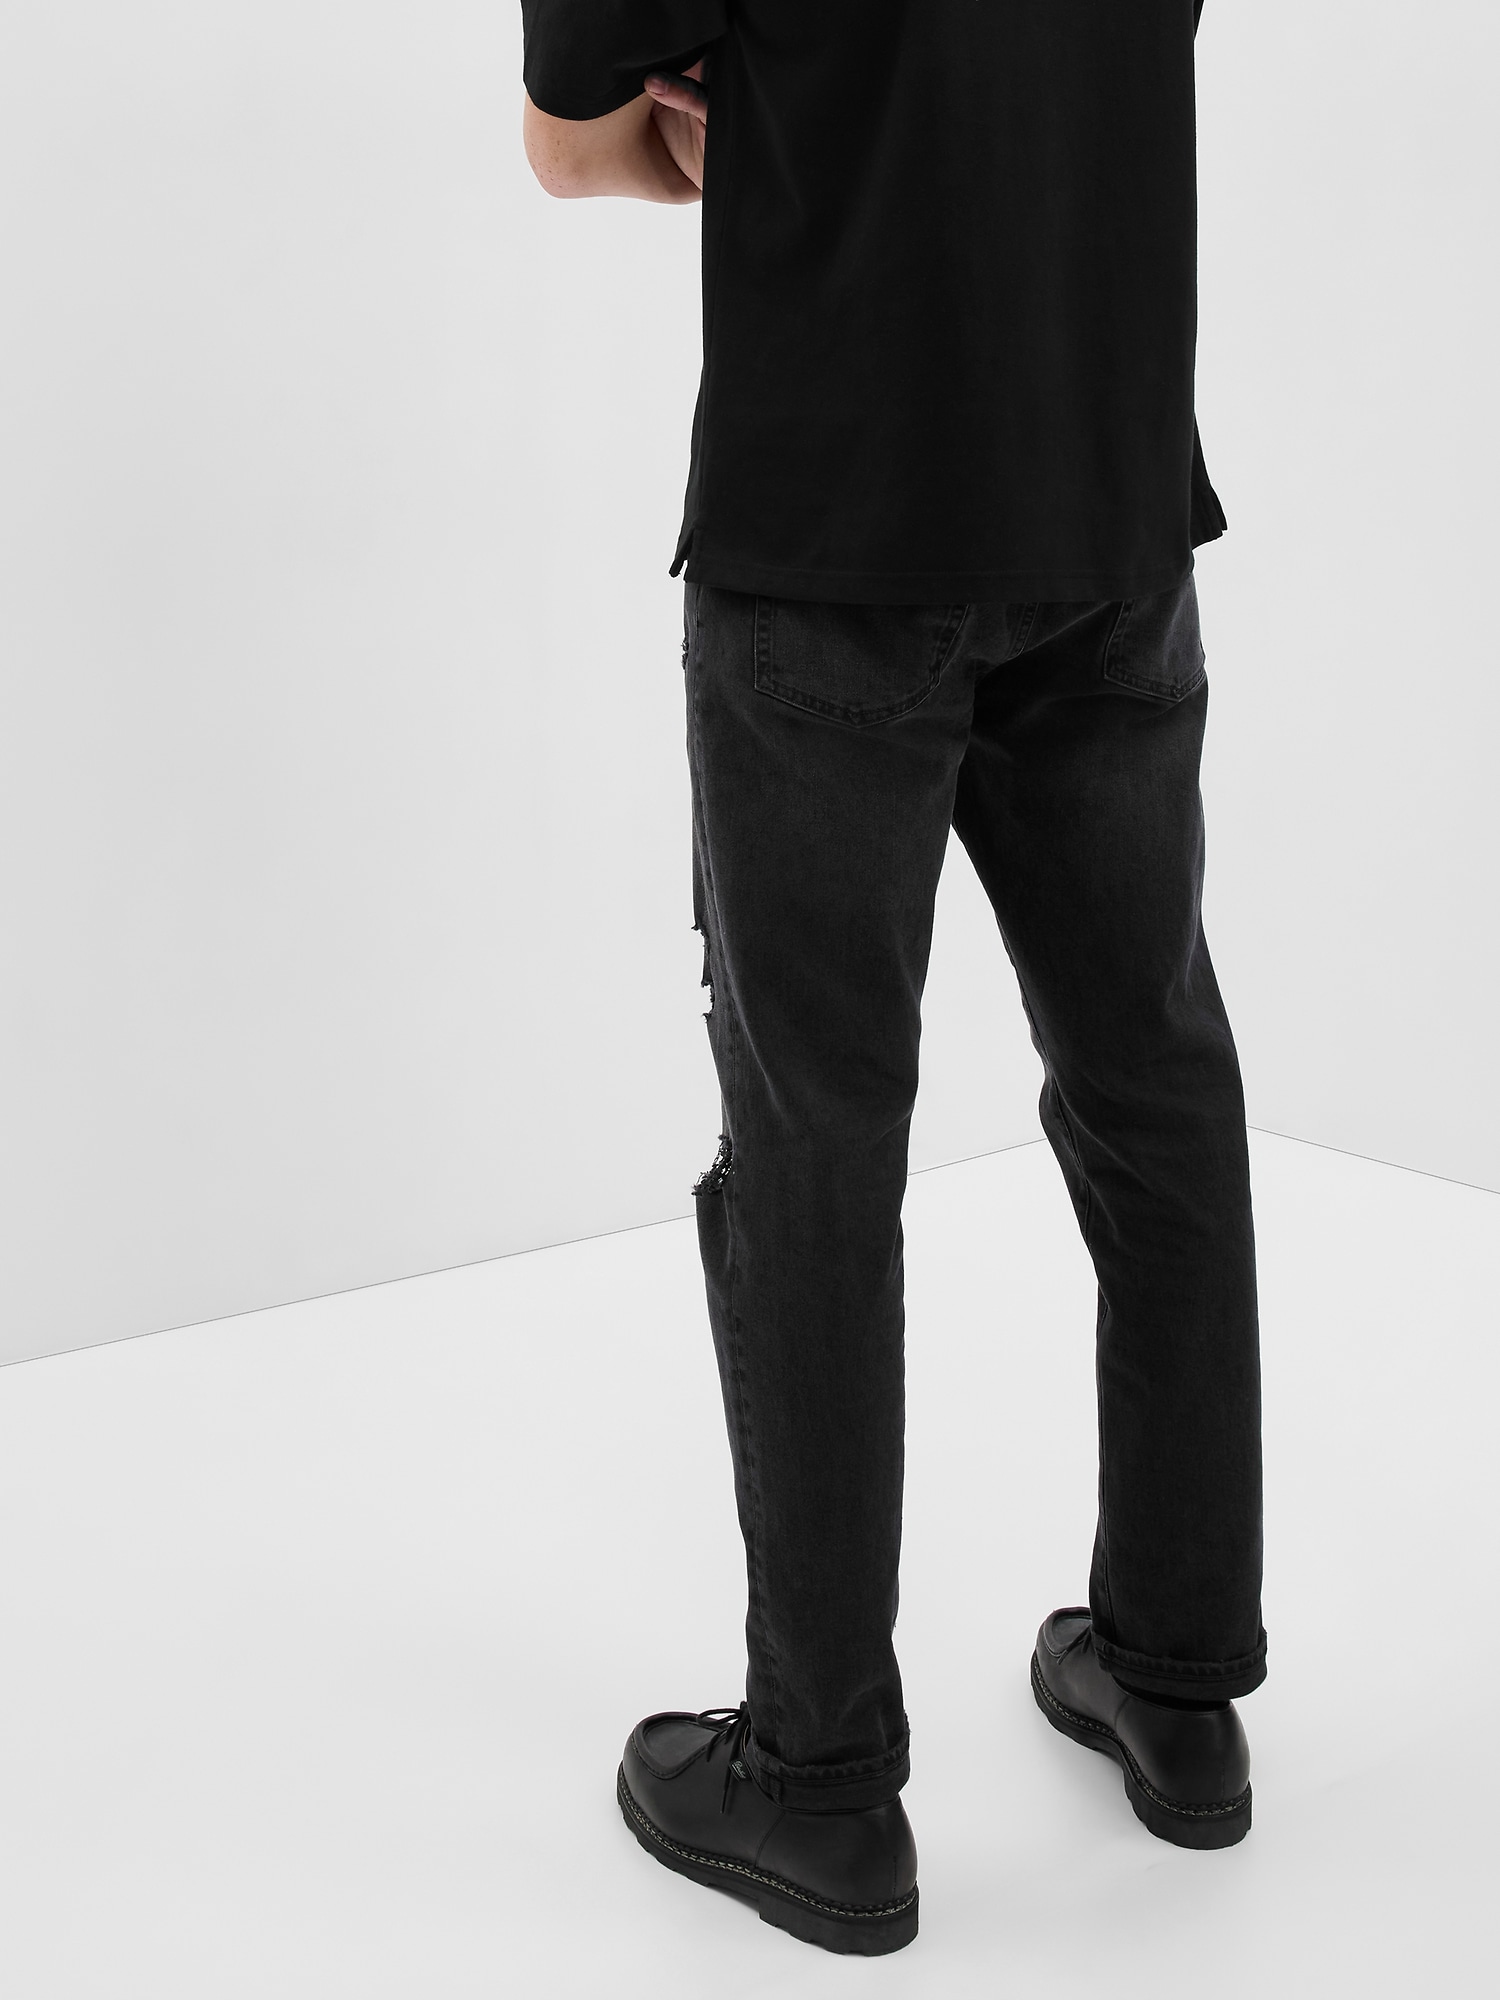 GAP Mens Gapflex Stretch Technology Slim Fit Denim Jeans, True